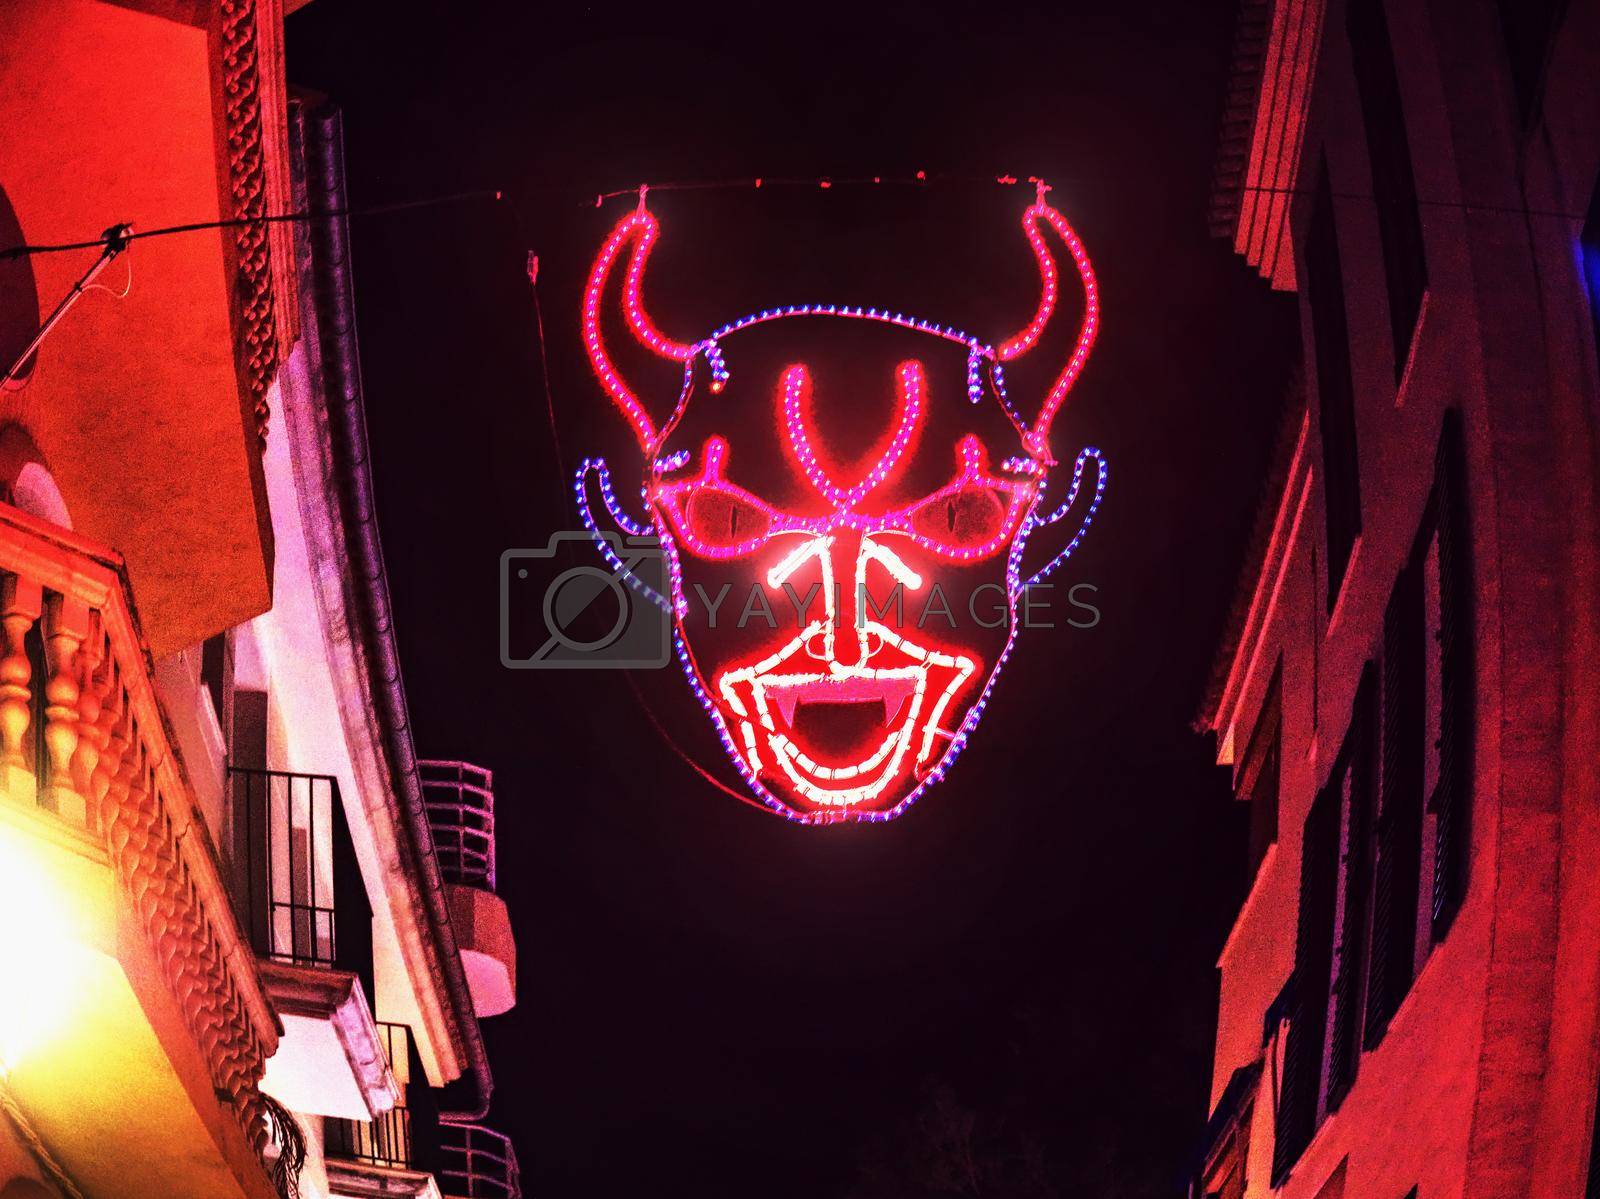 Devilish decoration  in Palma city during saint sebastian local patron festivities.